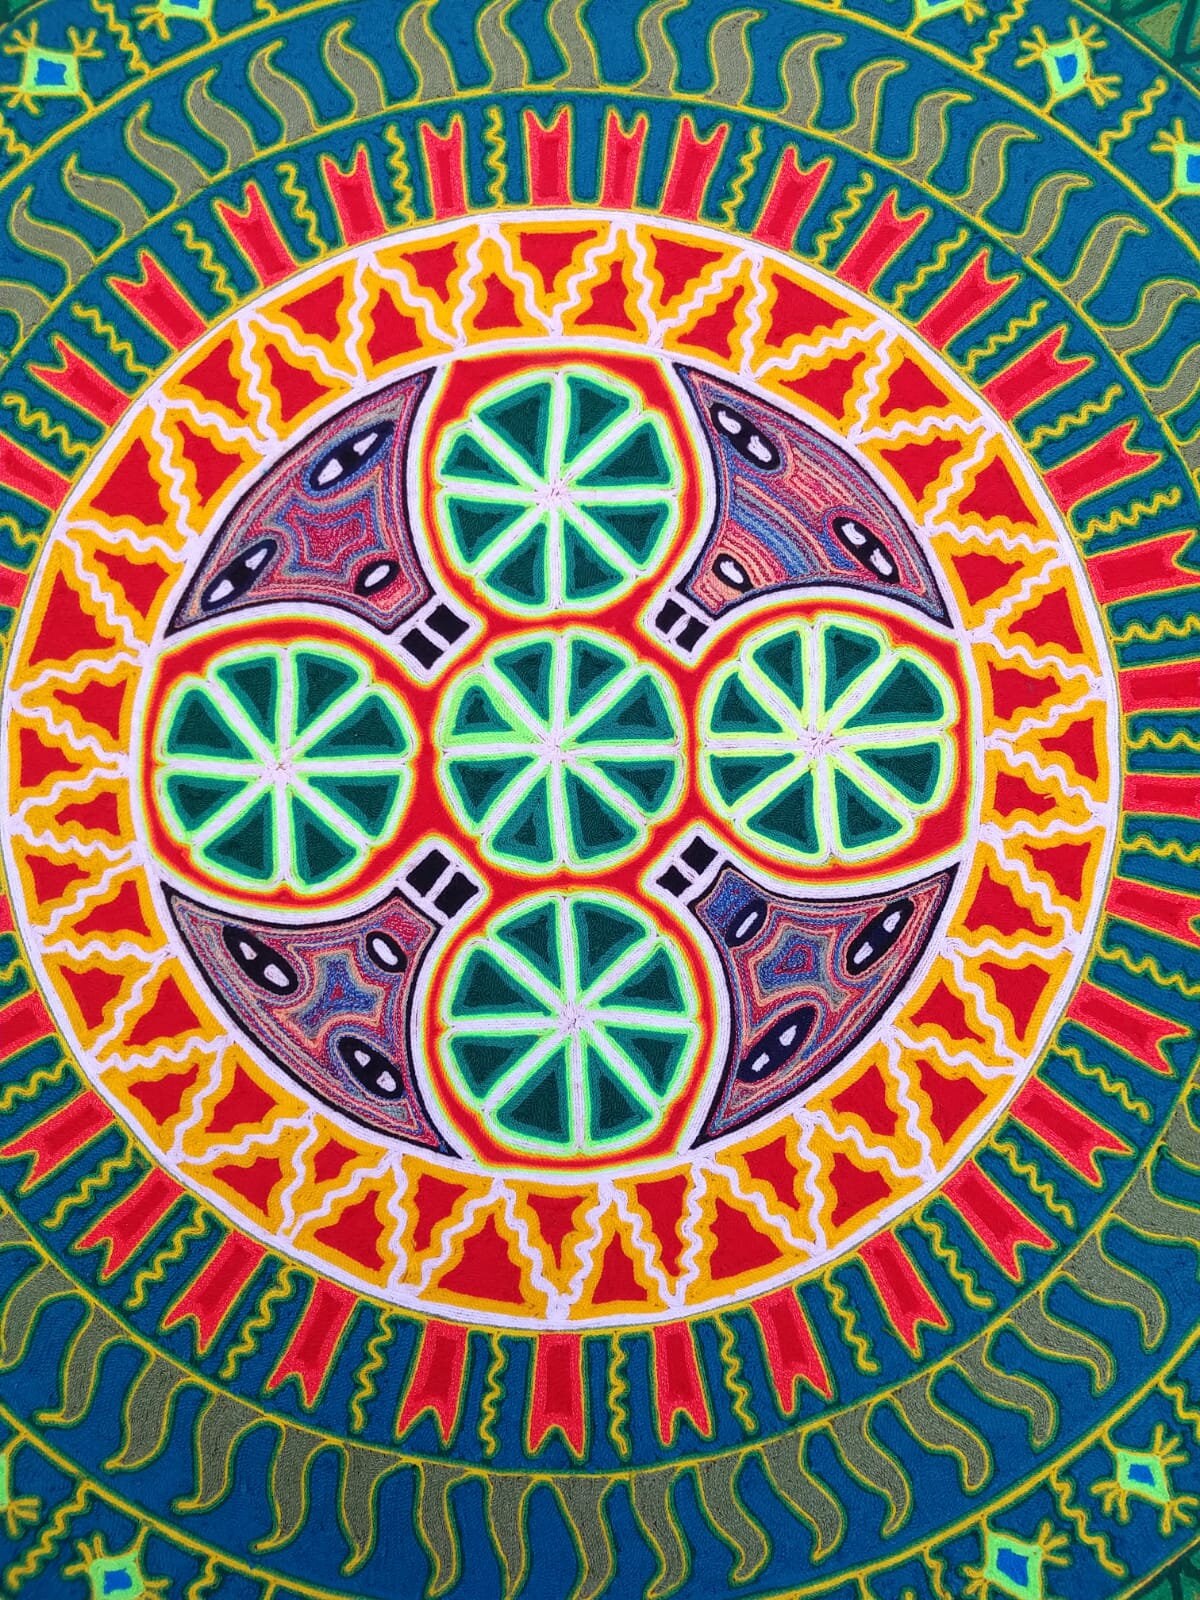 Huichol Yarn Painting Mexican Folk Art by Lourdes Benitez PP3995